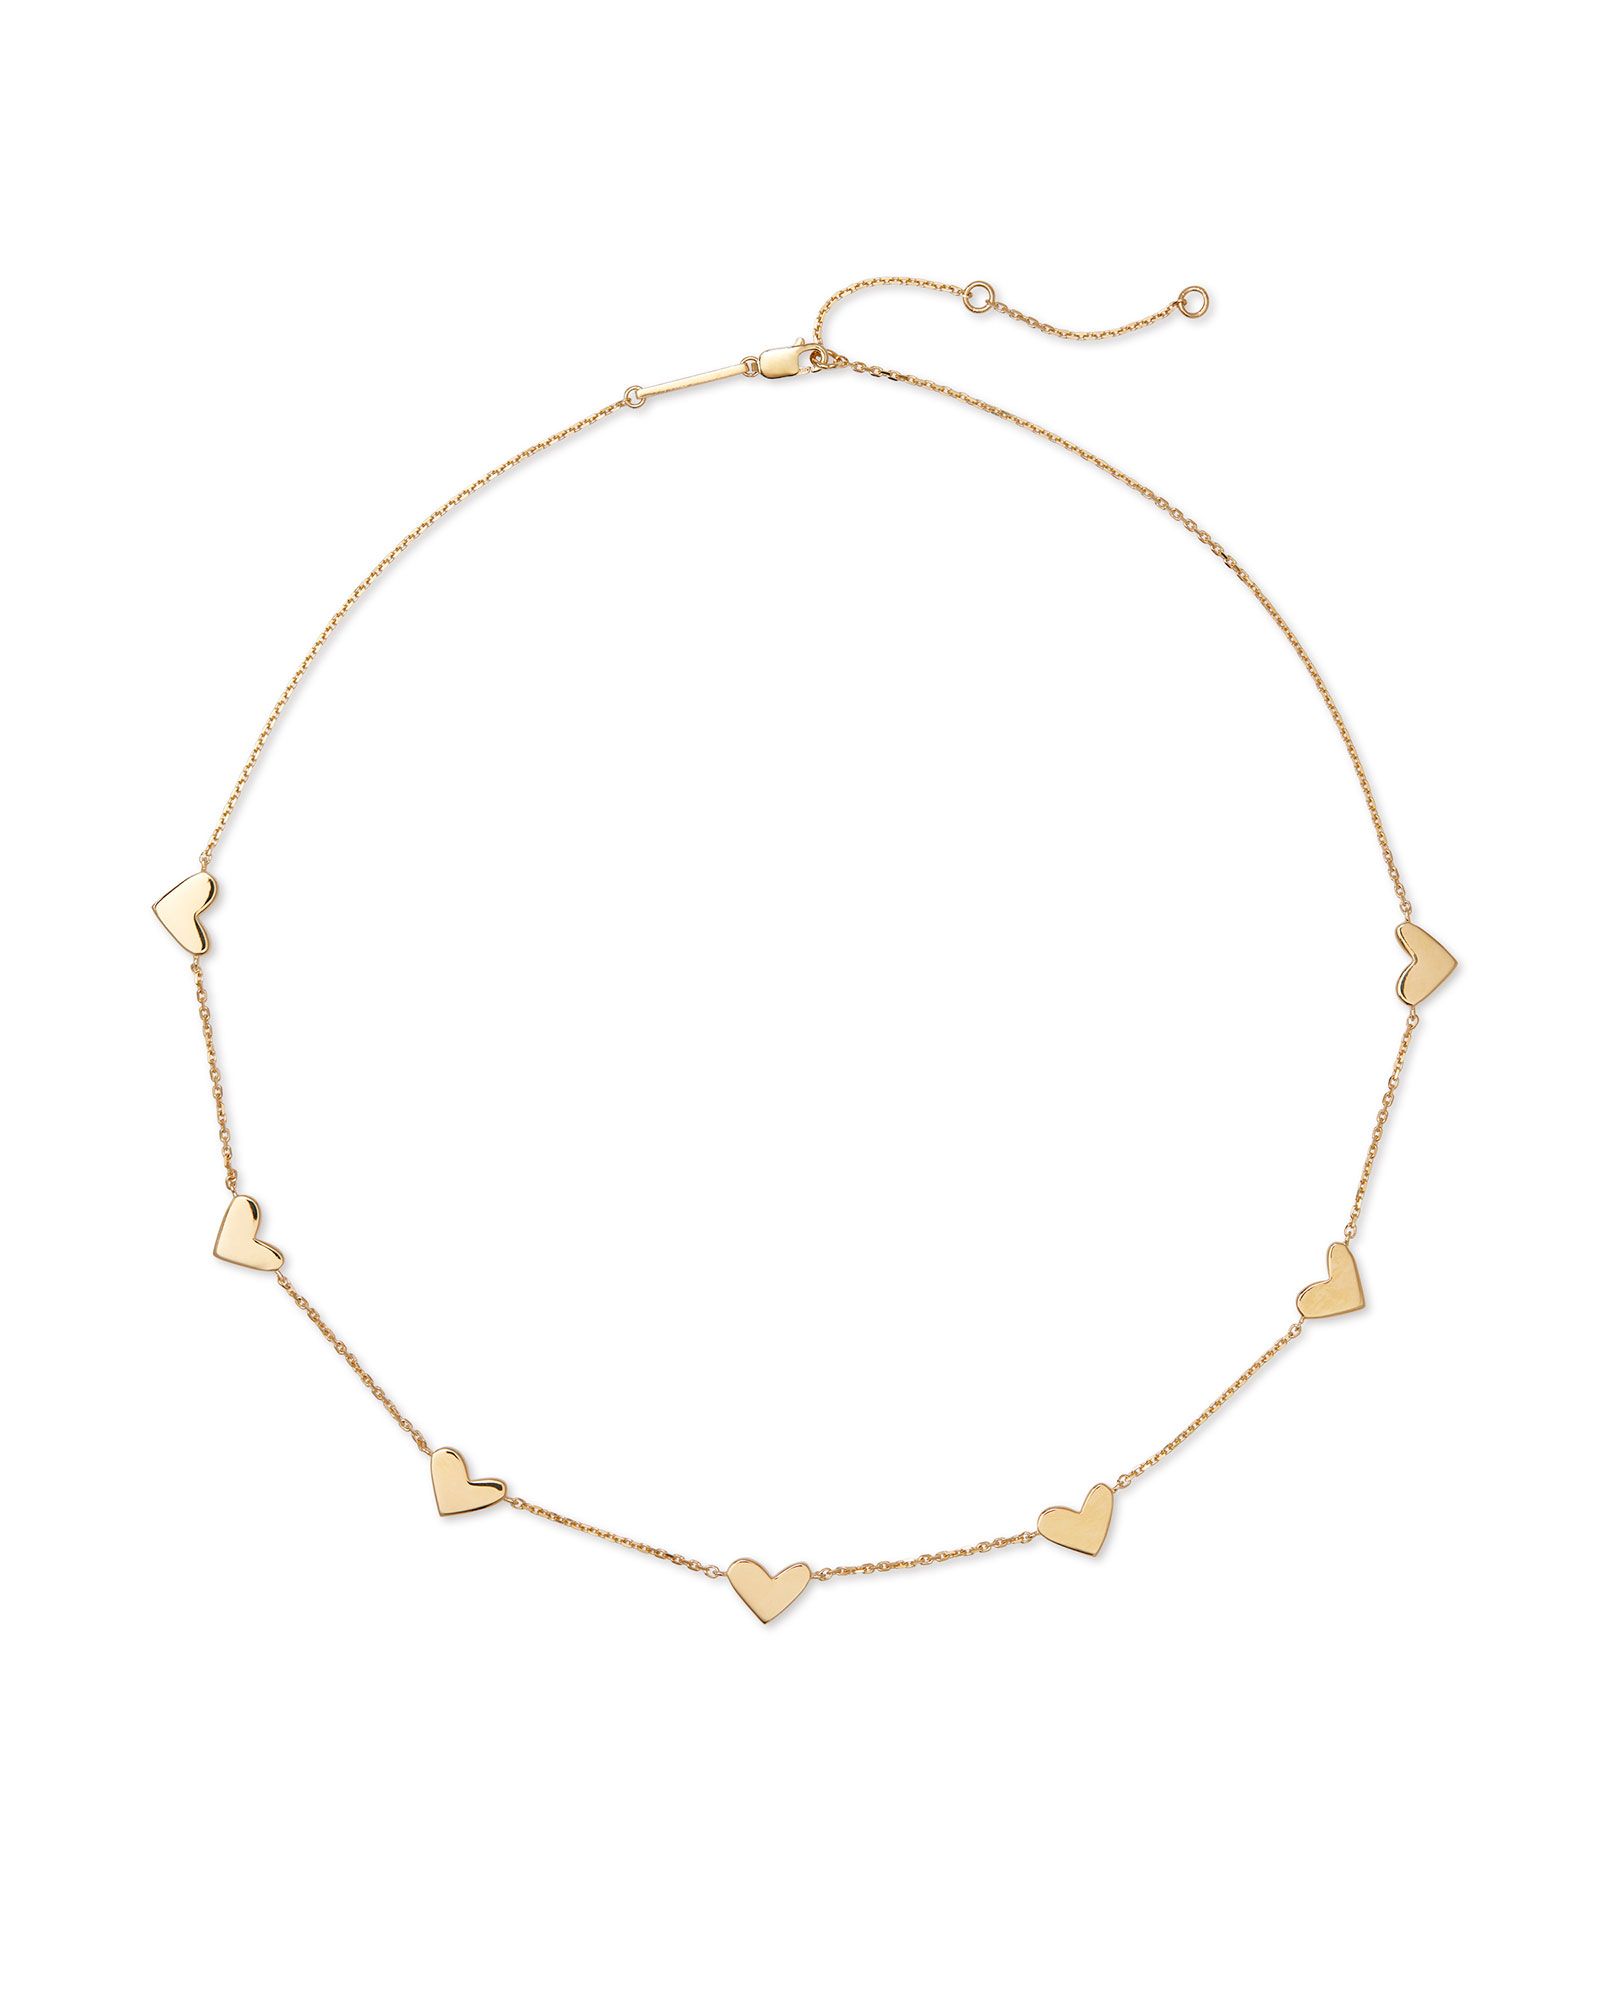 Ari Heart Strand Necklace in 18k Yellow Gold Vermeil | Kendra Scott | Kendra Scott